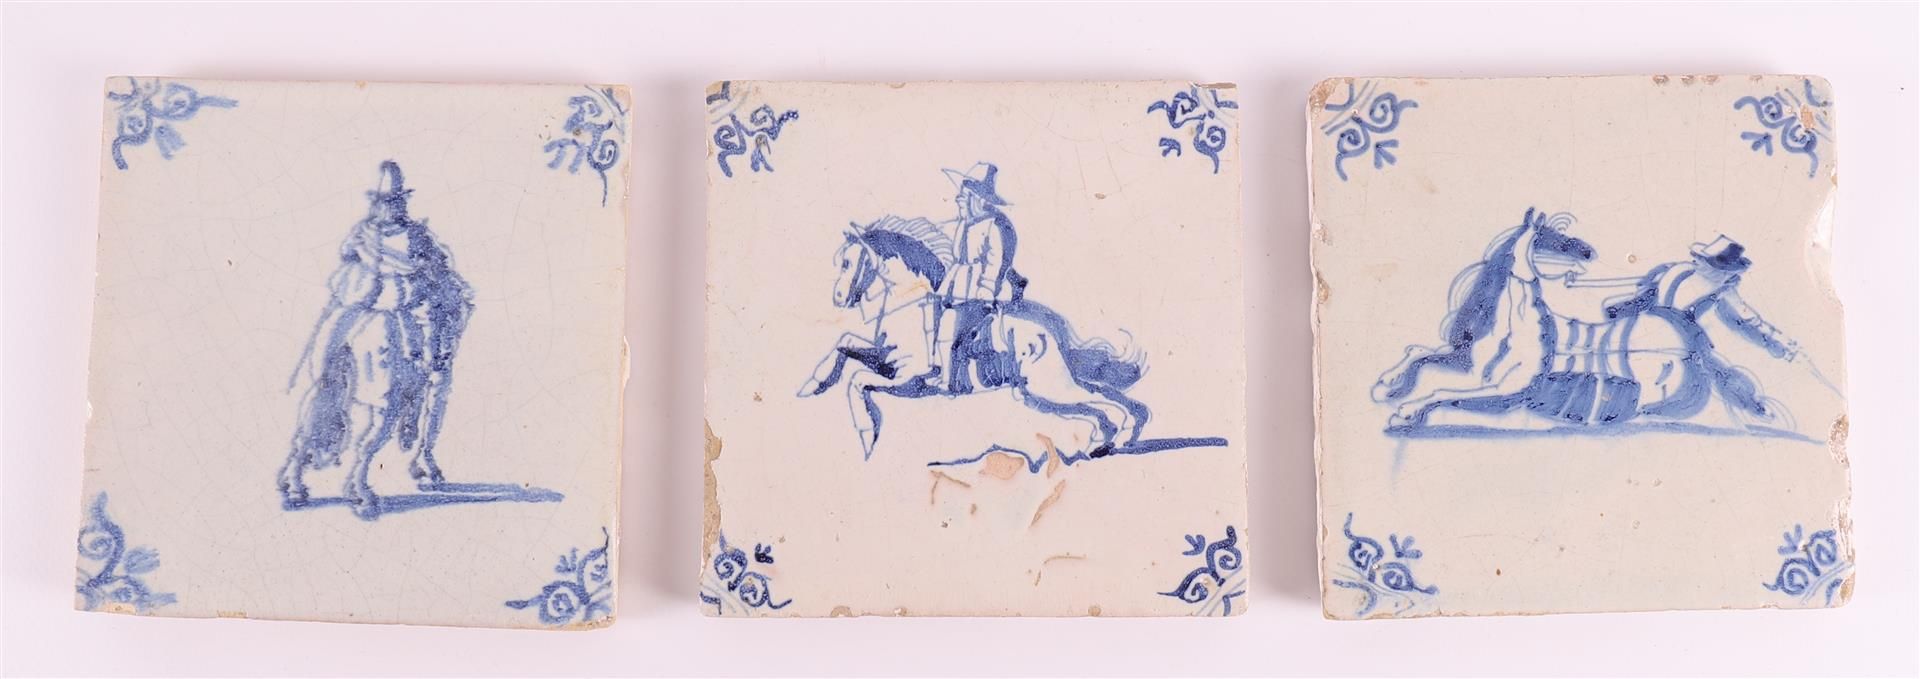 Three blue/white equestrian tiles with ox head corner motifs, Holland 17th centu